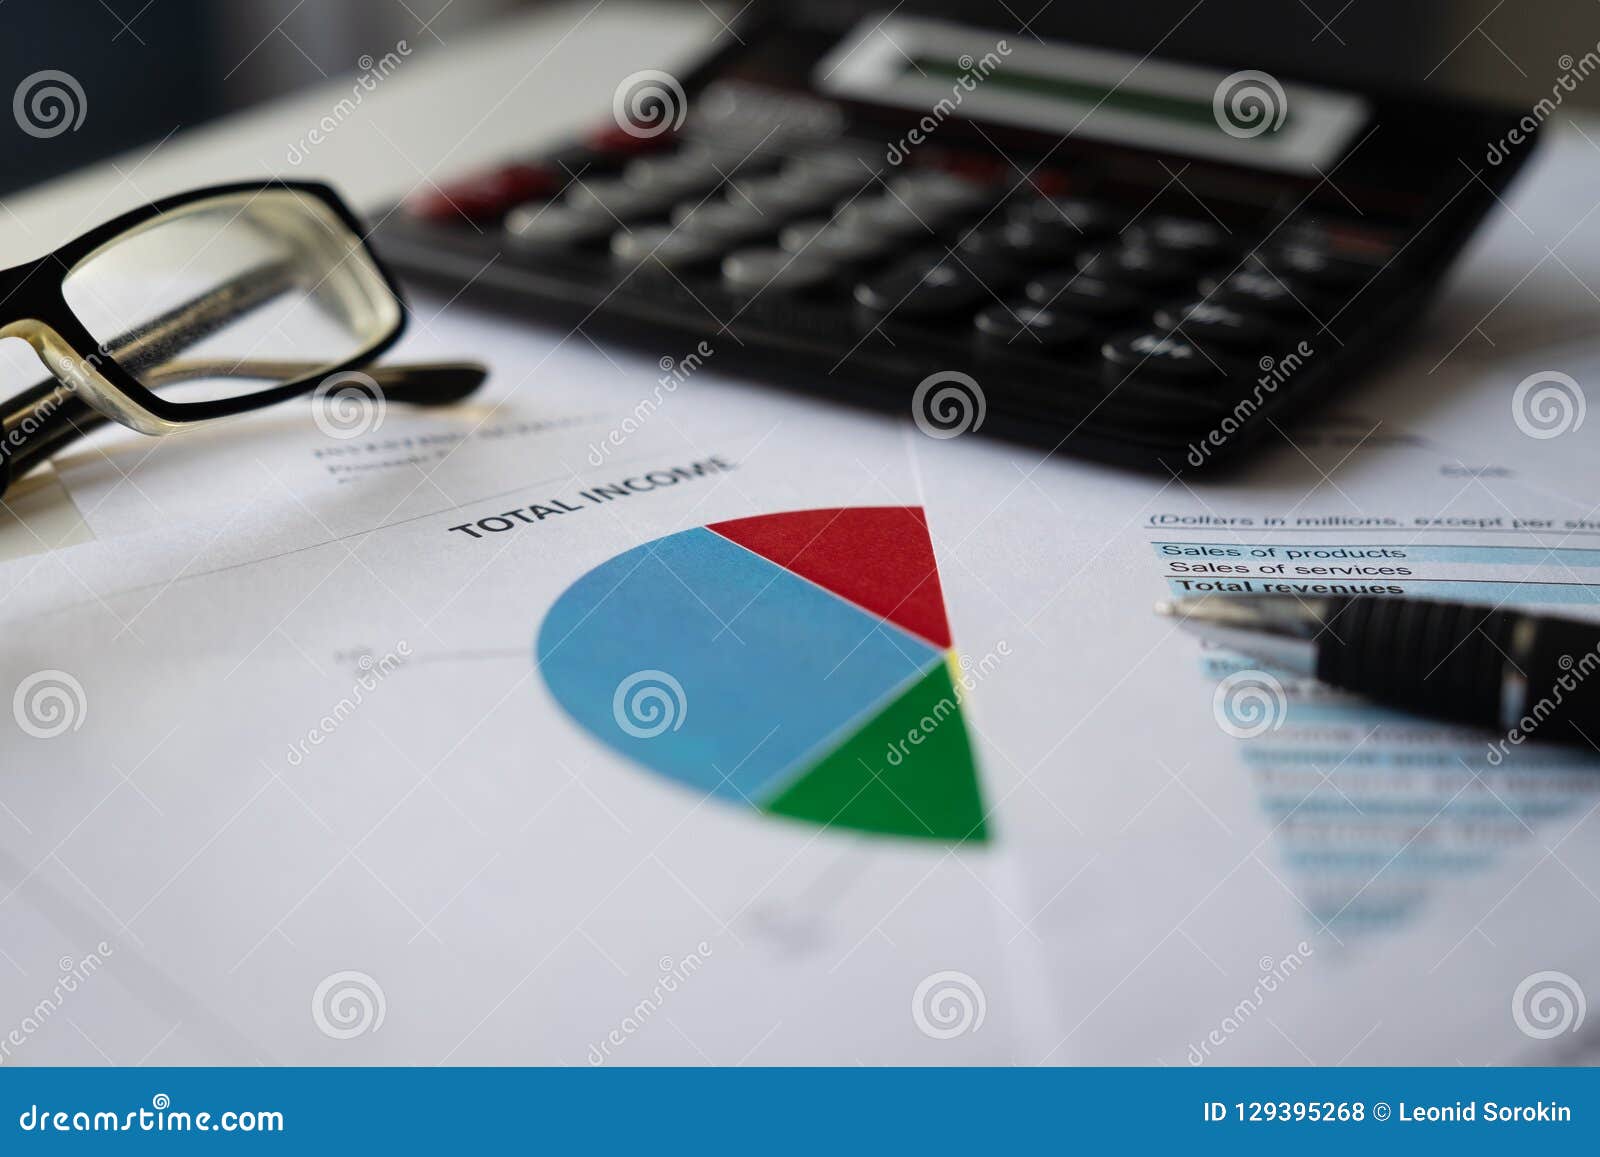 financial business planning, balance sheet the investment portfolio